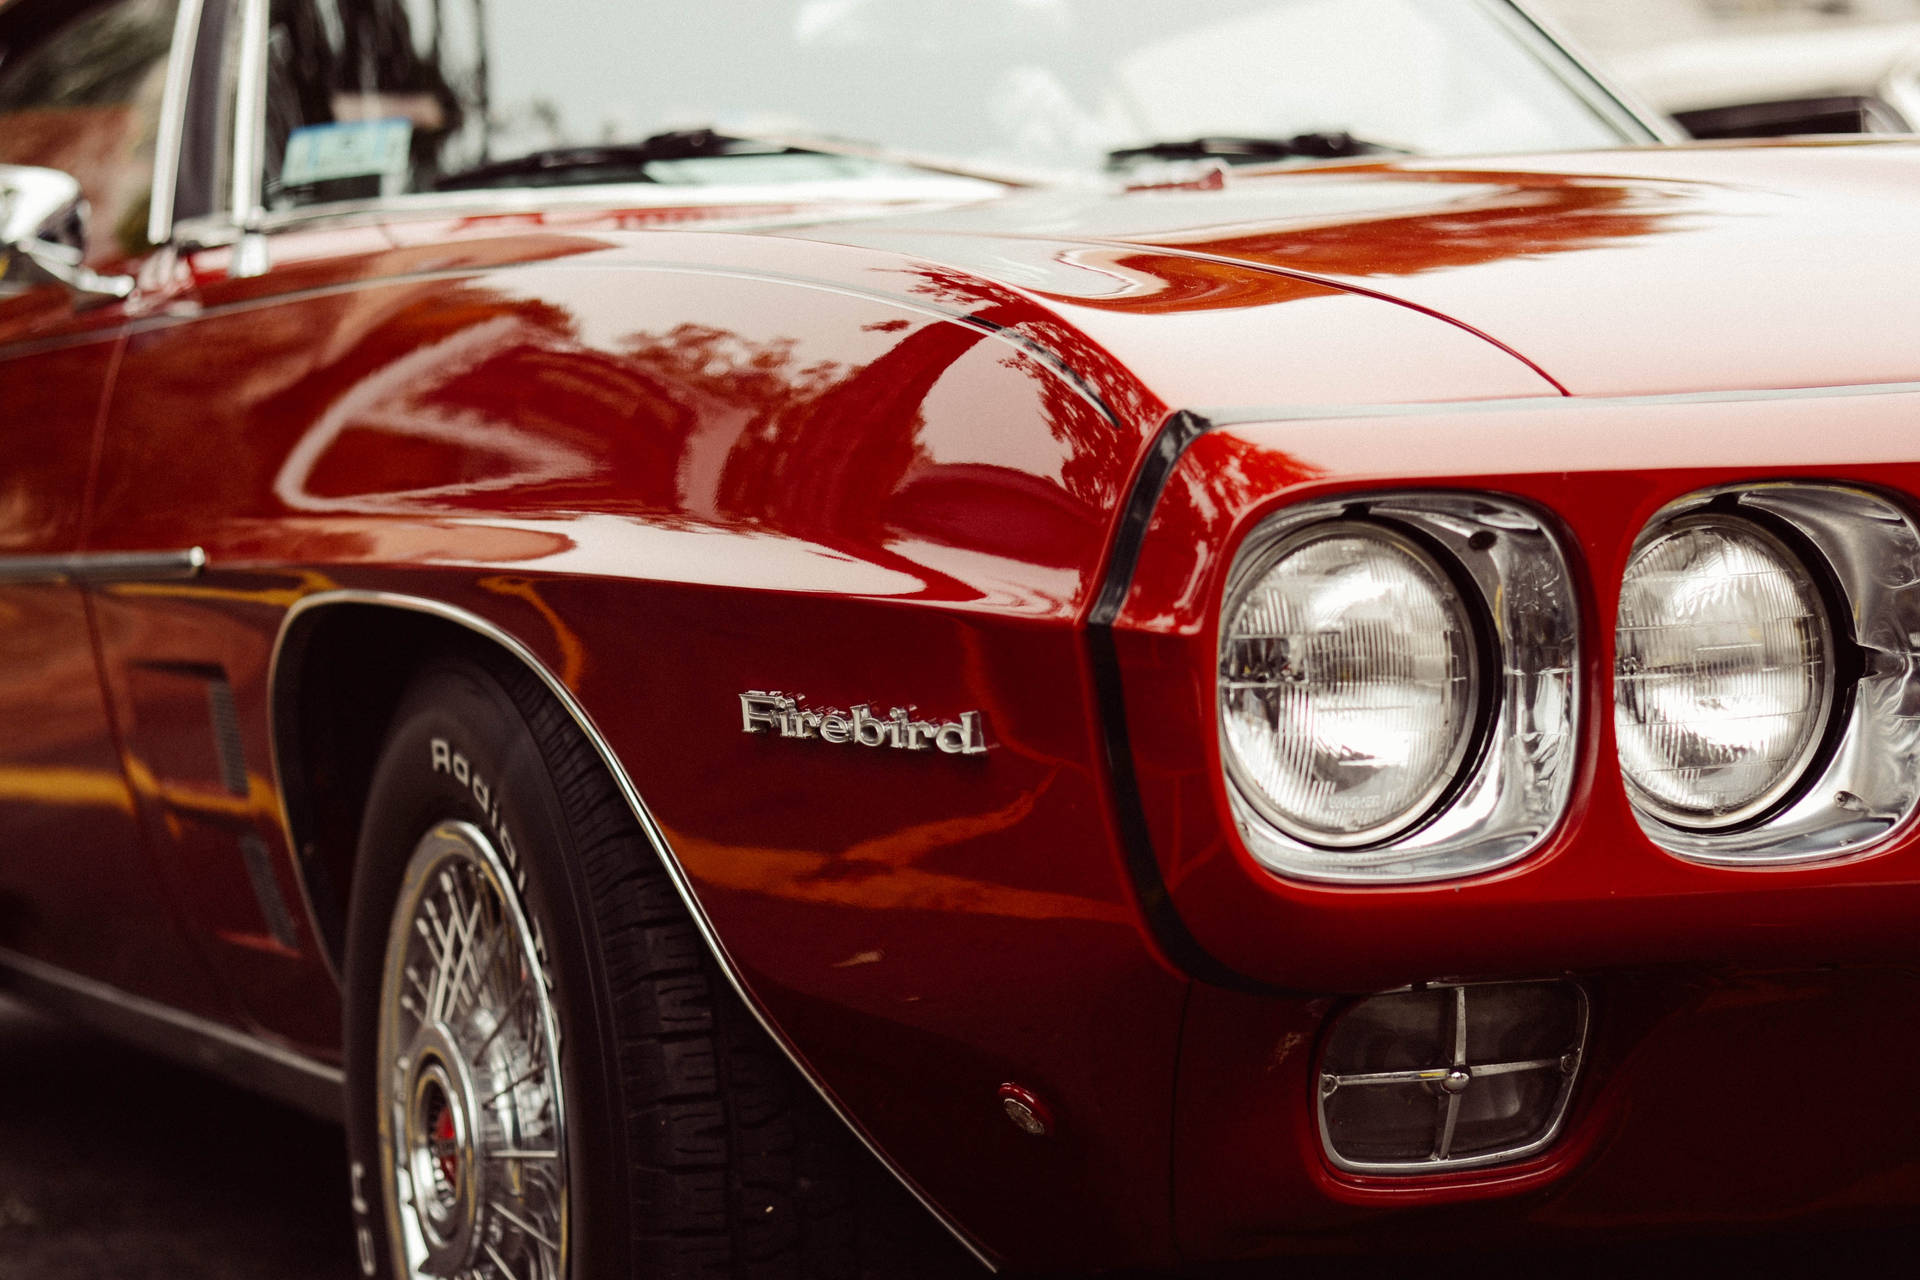 Aesthetic 4k Car Red Pontiac Firebird Background